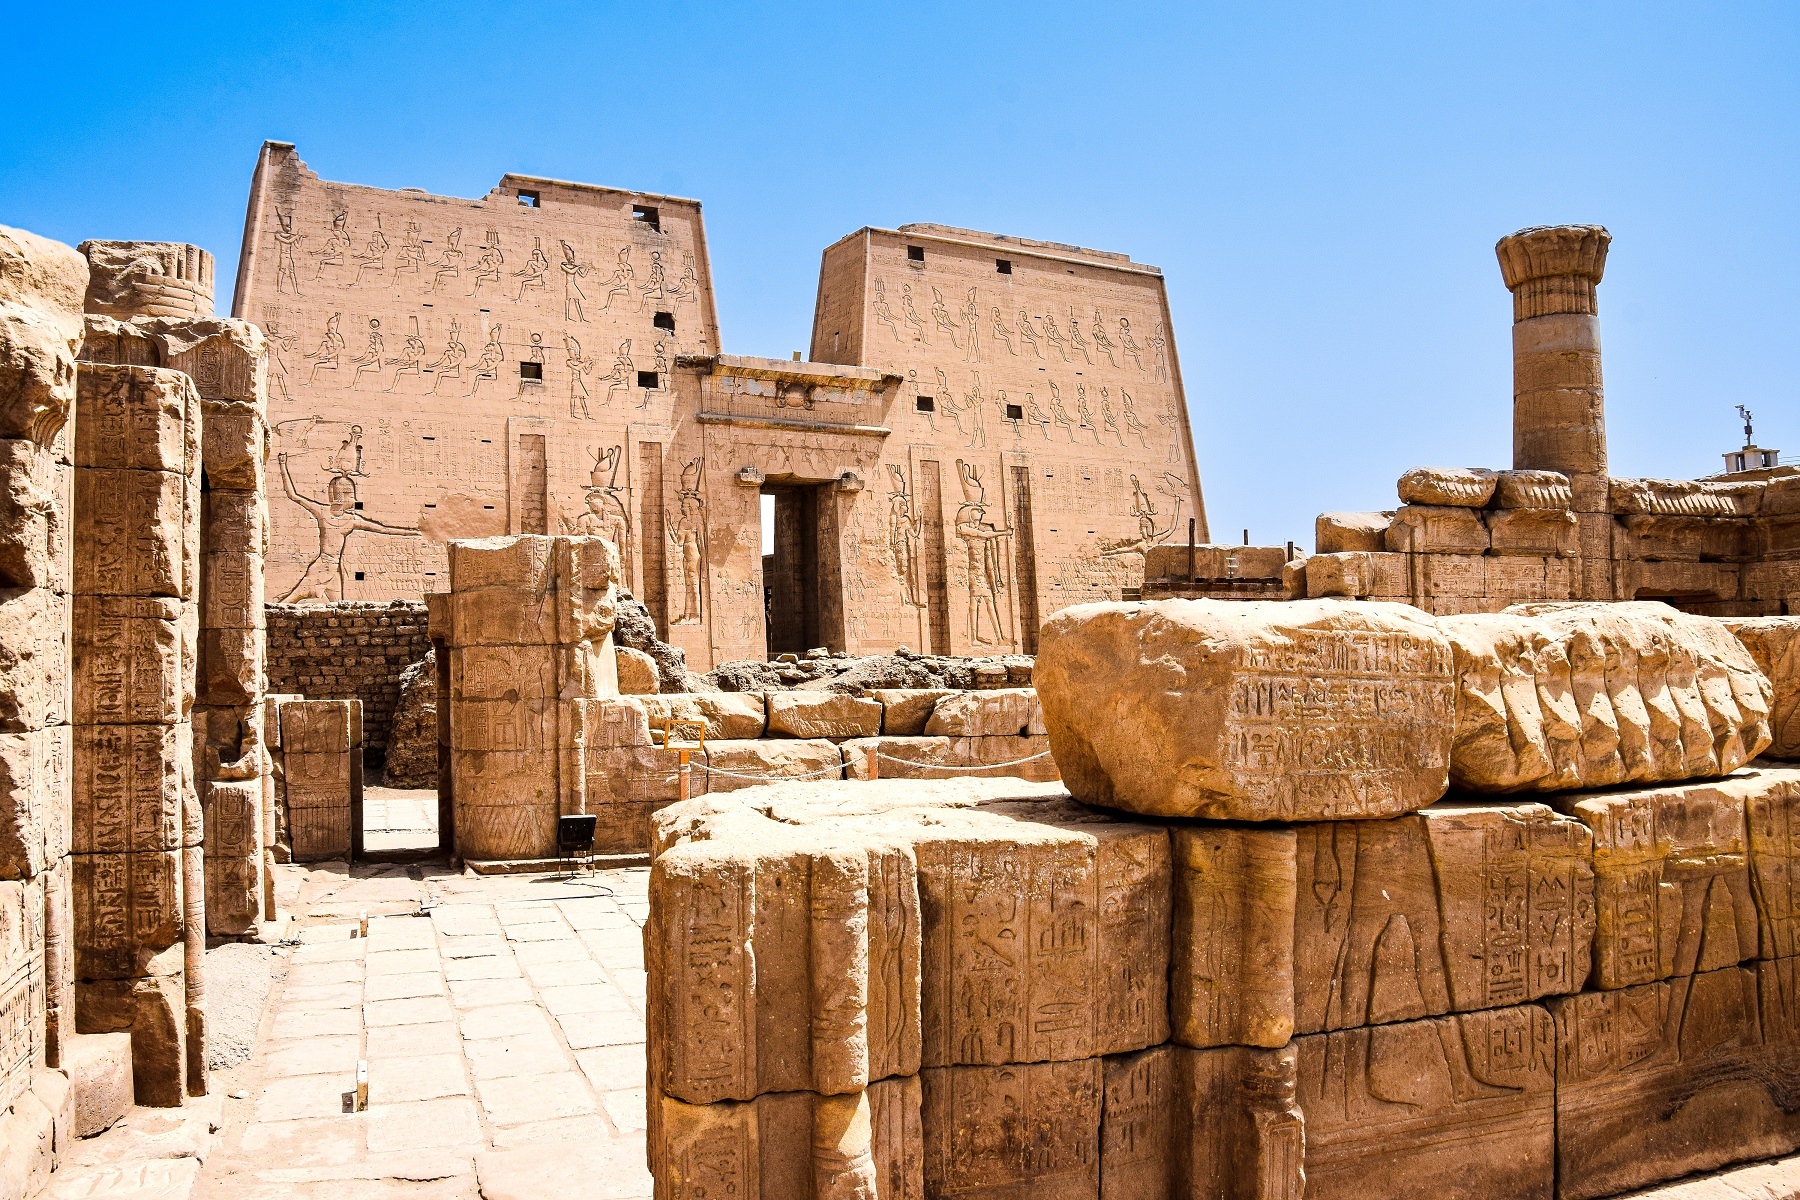 Day 07: Kom Ombo - Edfu Temples - Cruise to Luxor